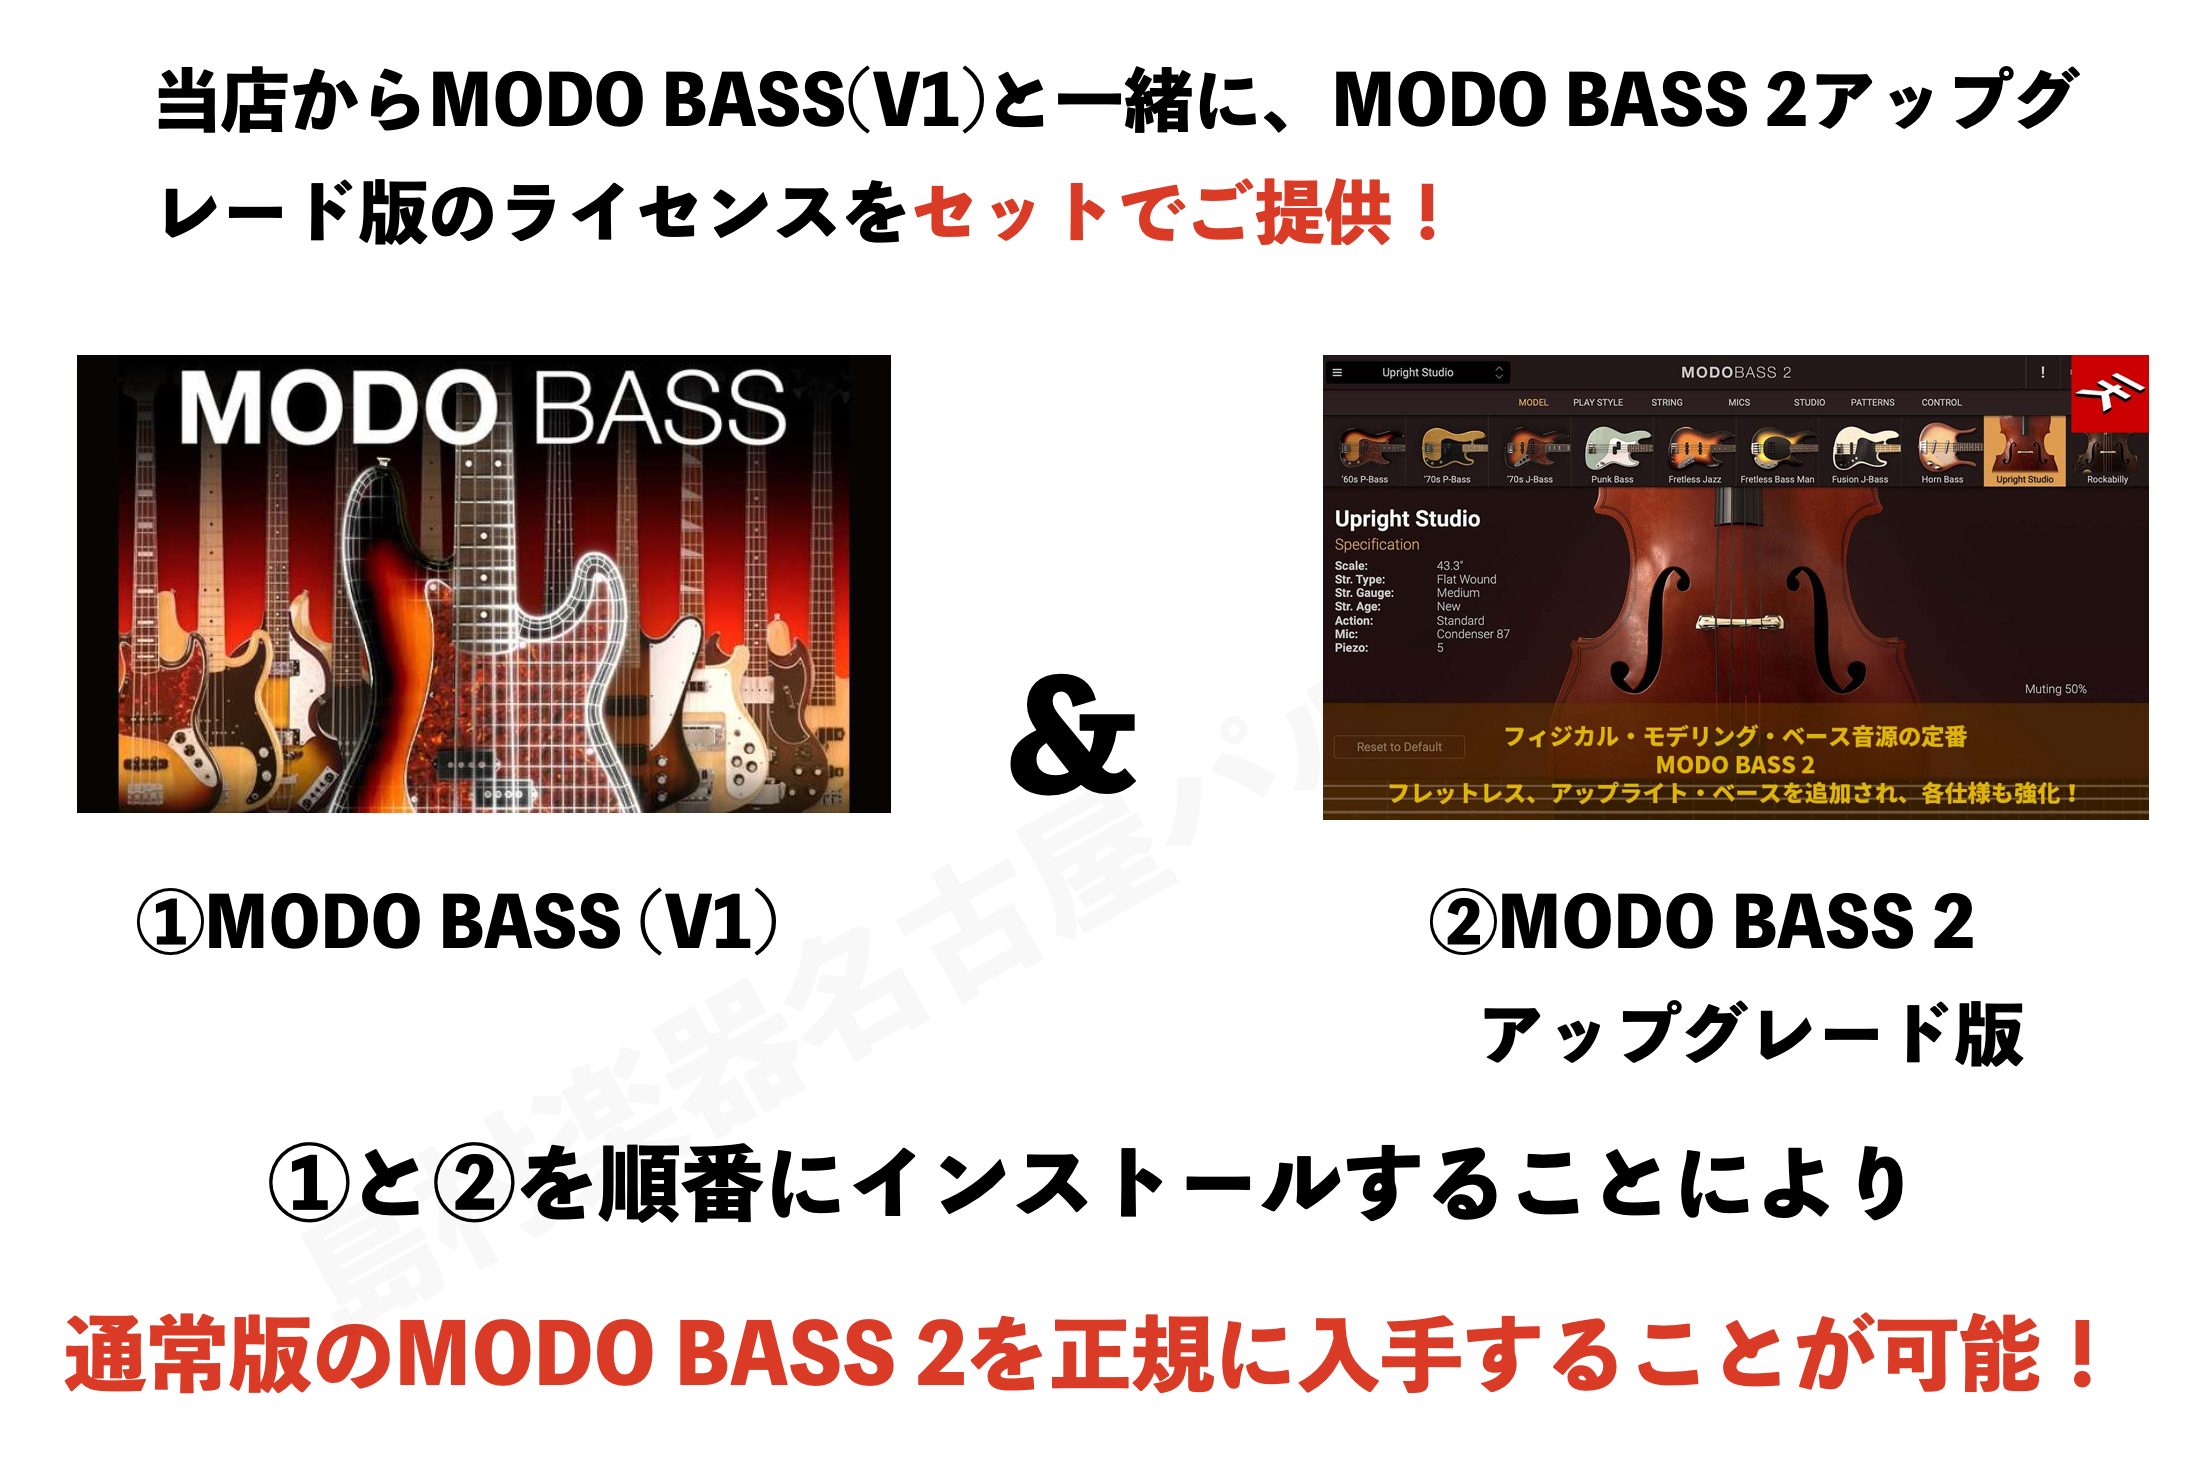 MODO BASS2 買い合わせ版物理モデリング音源